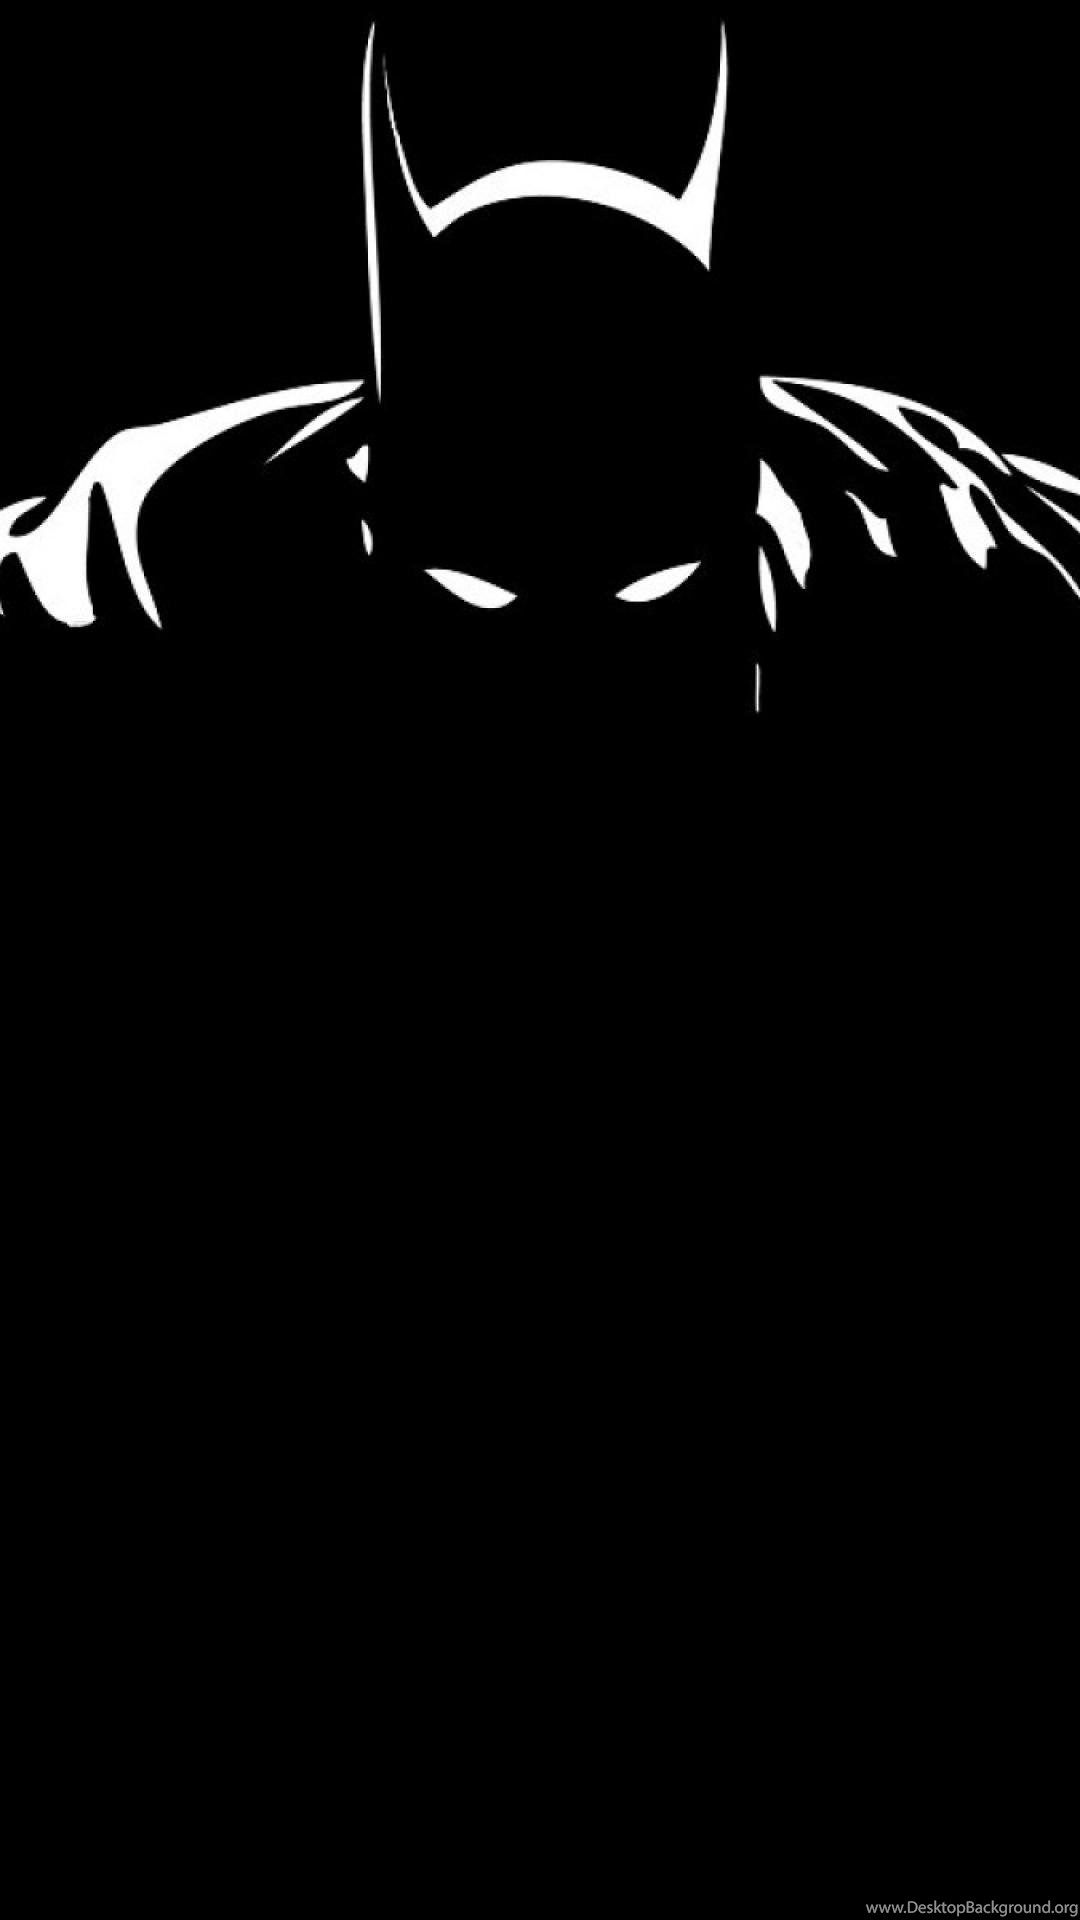 Batman Black And White iPhone 6 Plus Wallpaper Desktop Background